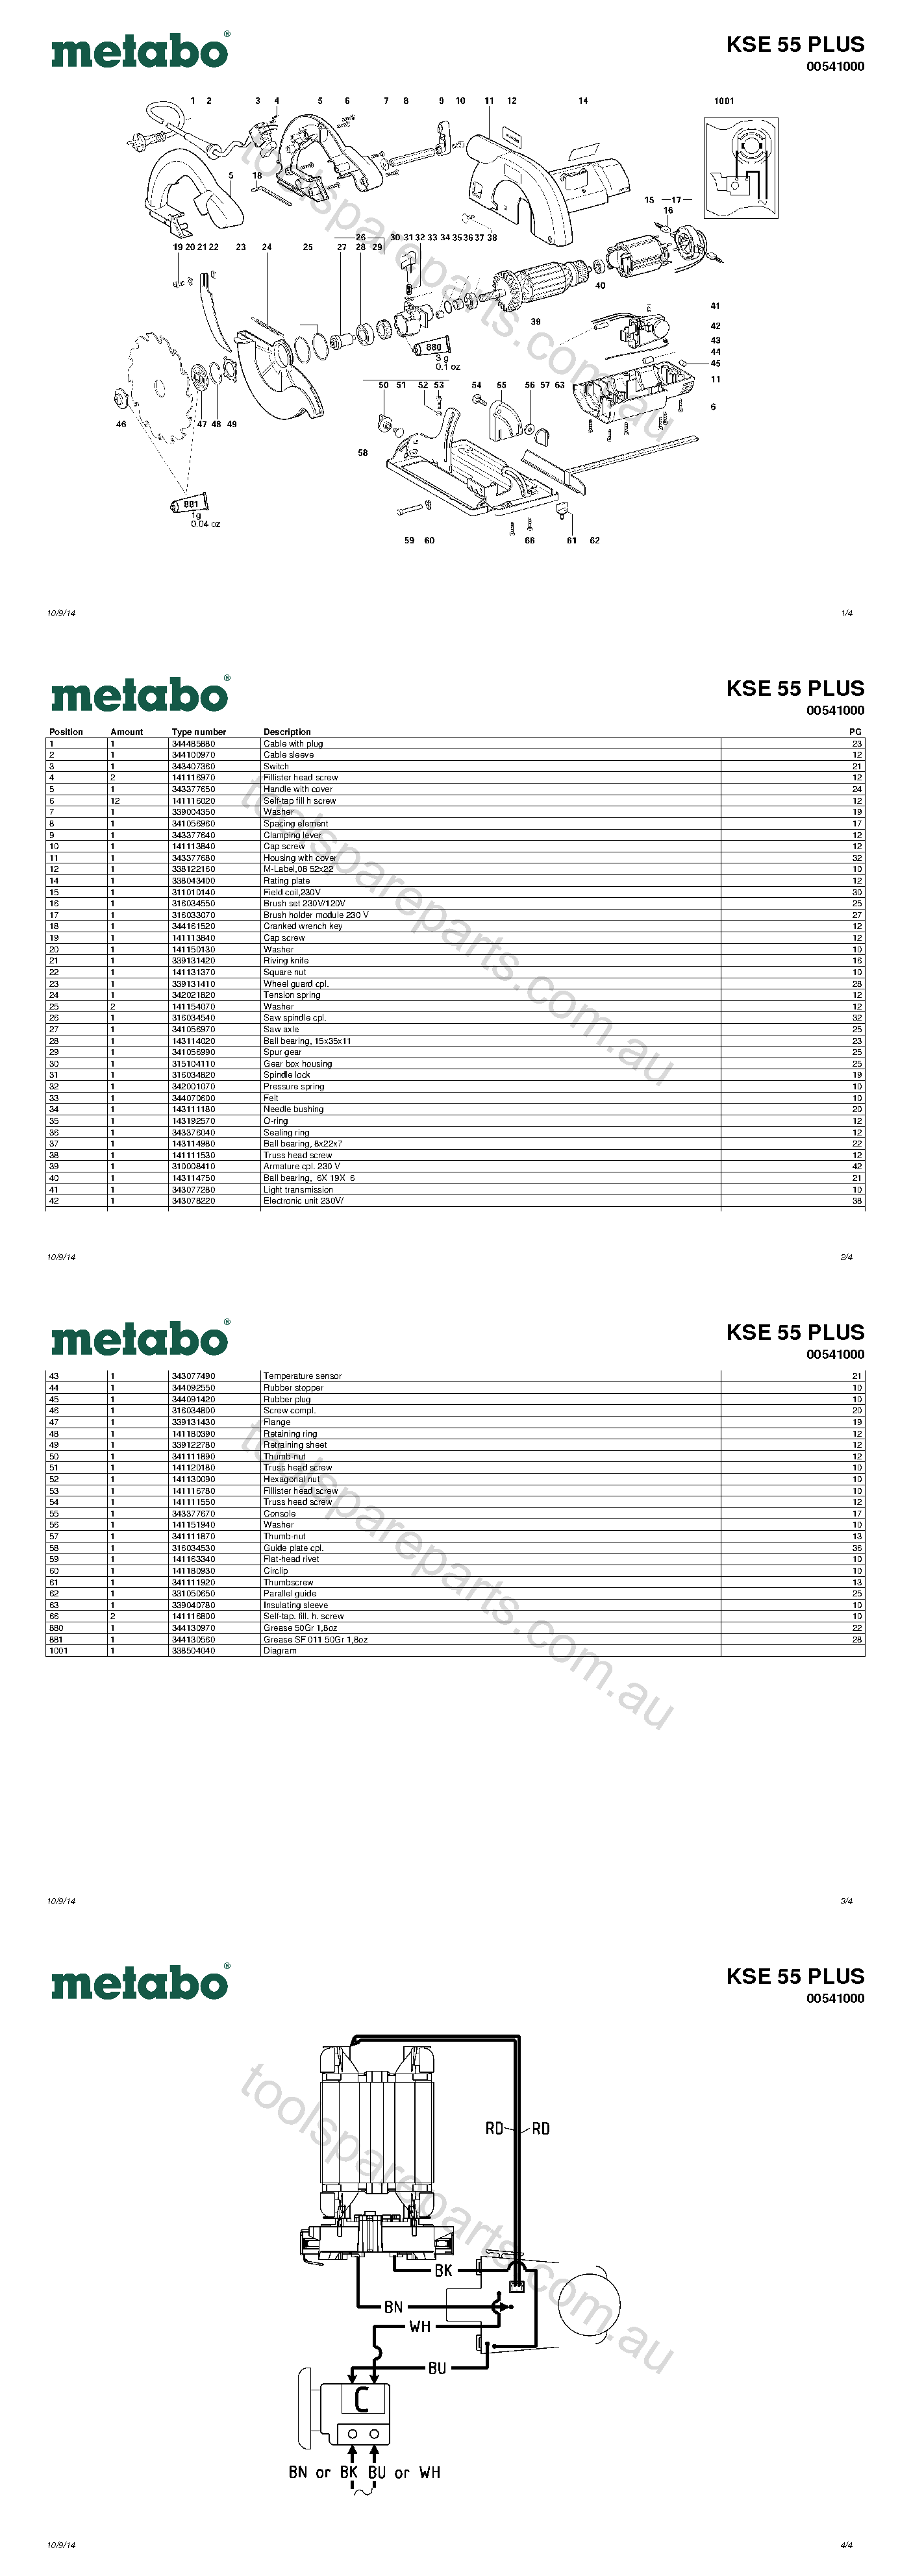 Metabo KSE 55 PLUS 00541000  Diagram 1